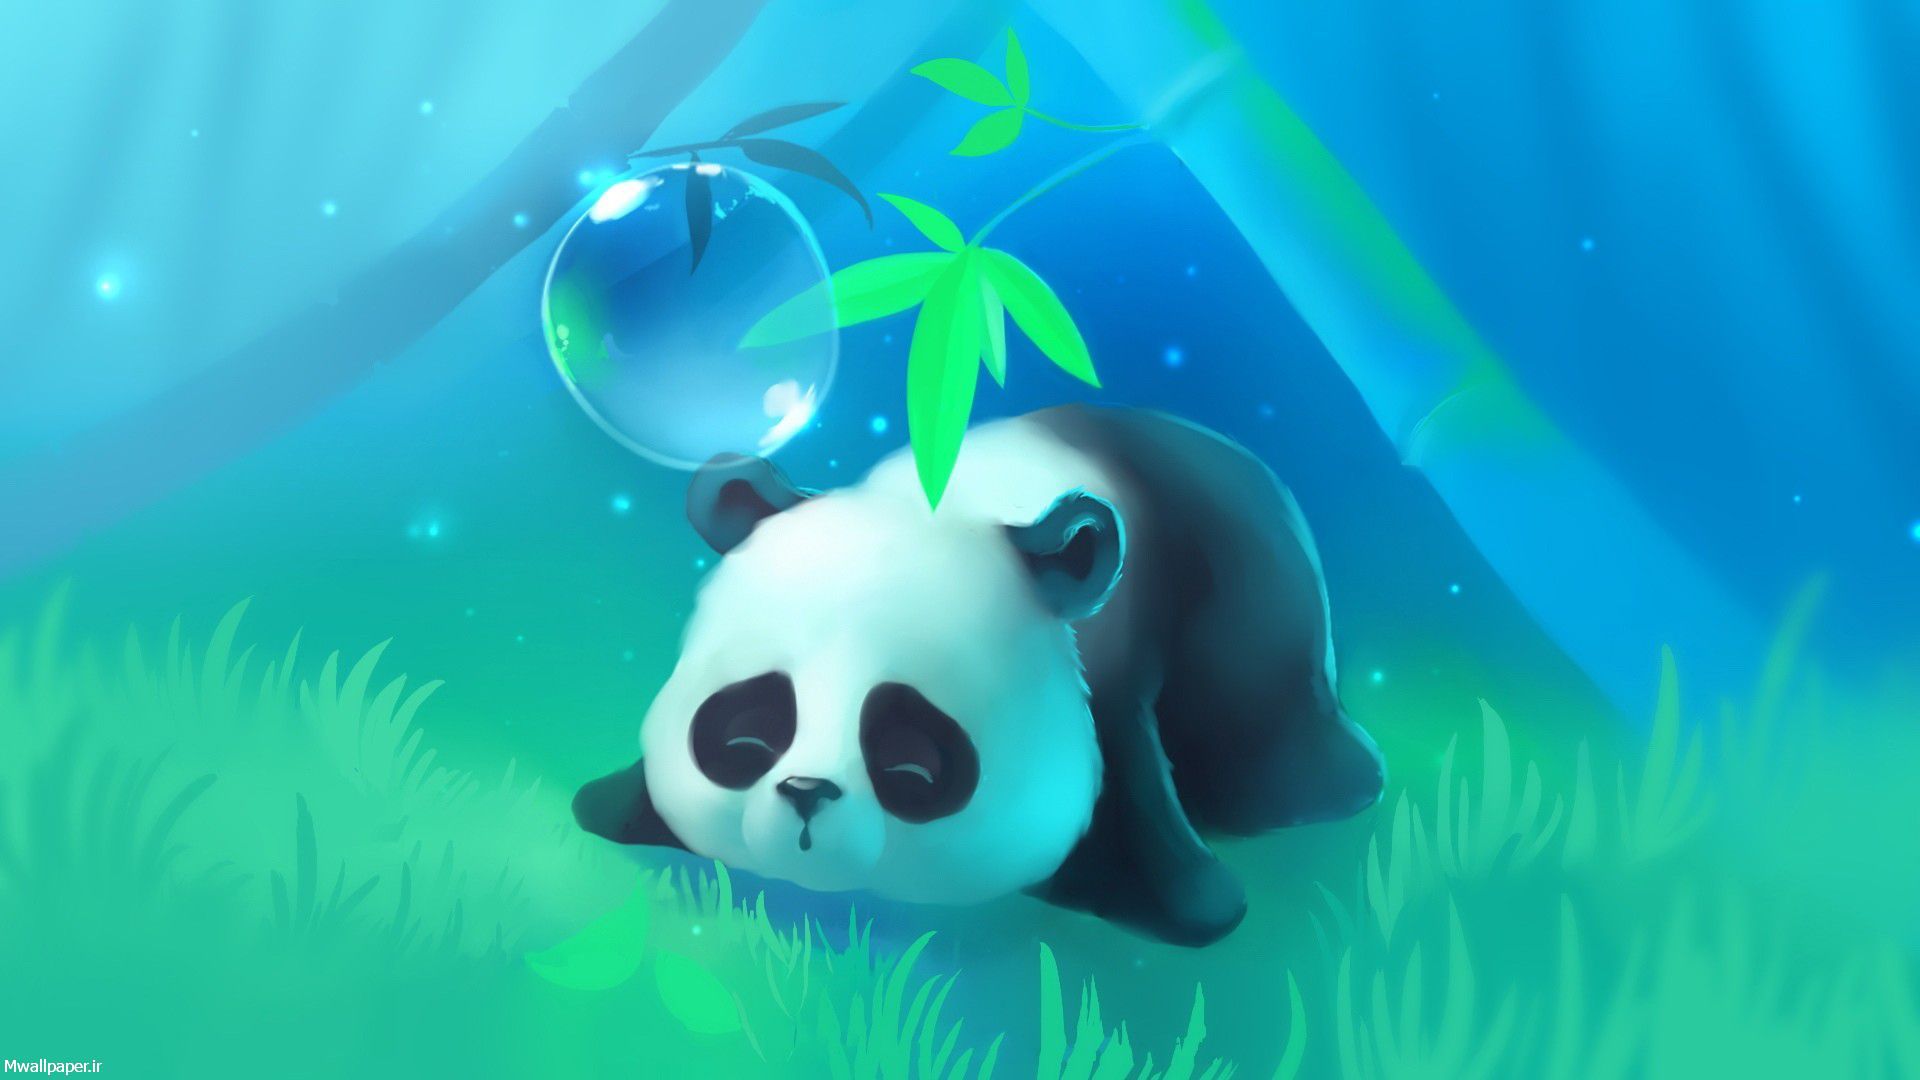 Animated Desktop Panda Wallpaper Unique Panda Wallpapers S Backgrounds 1024768 Panda